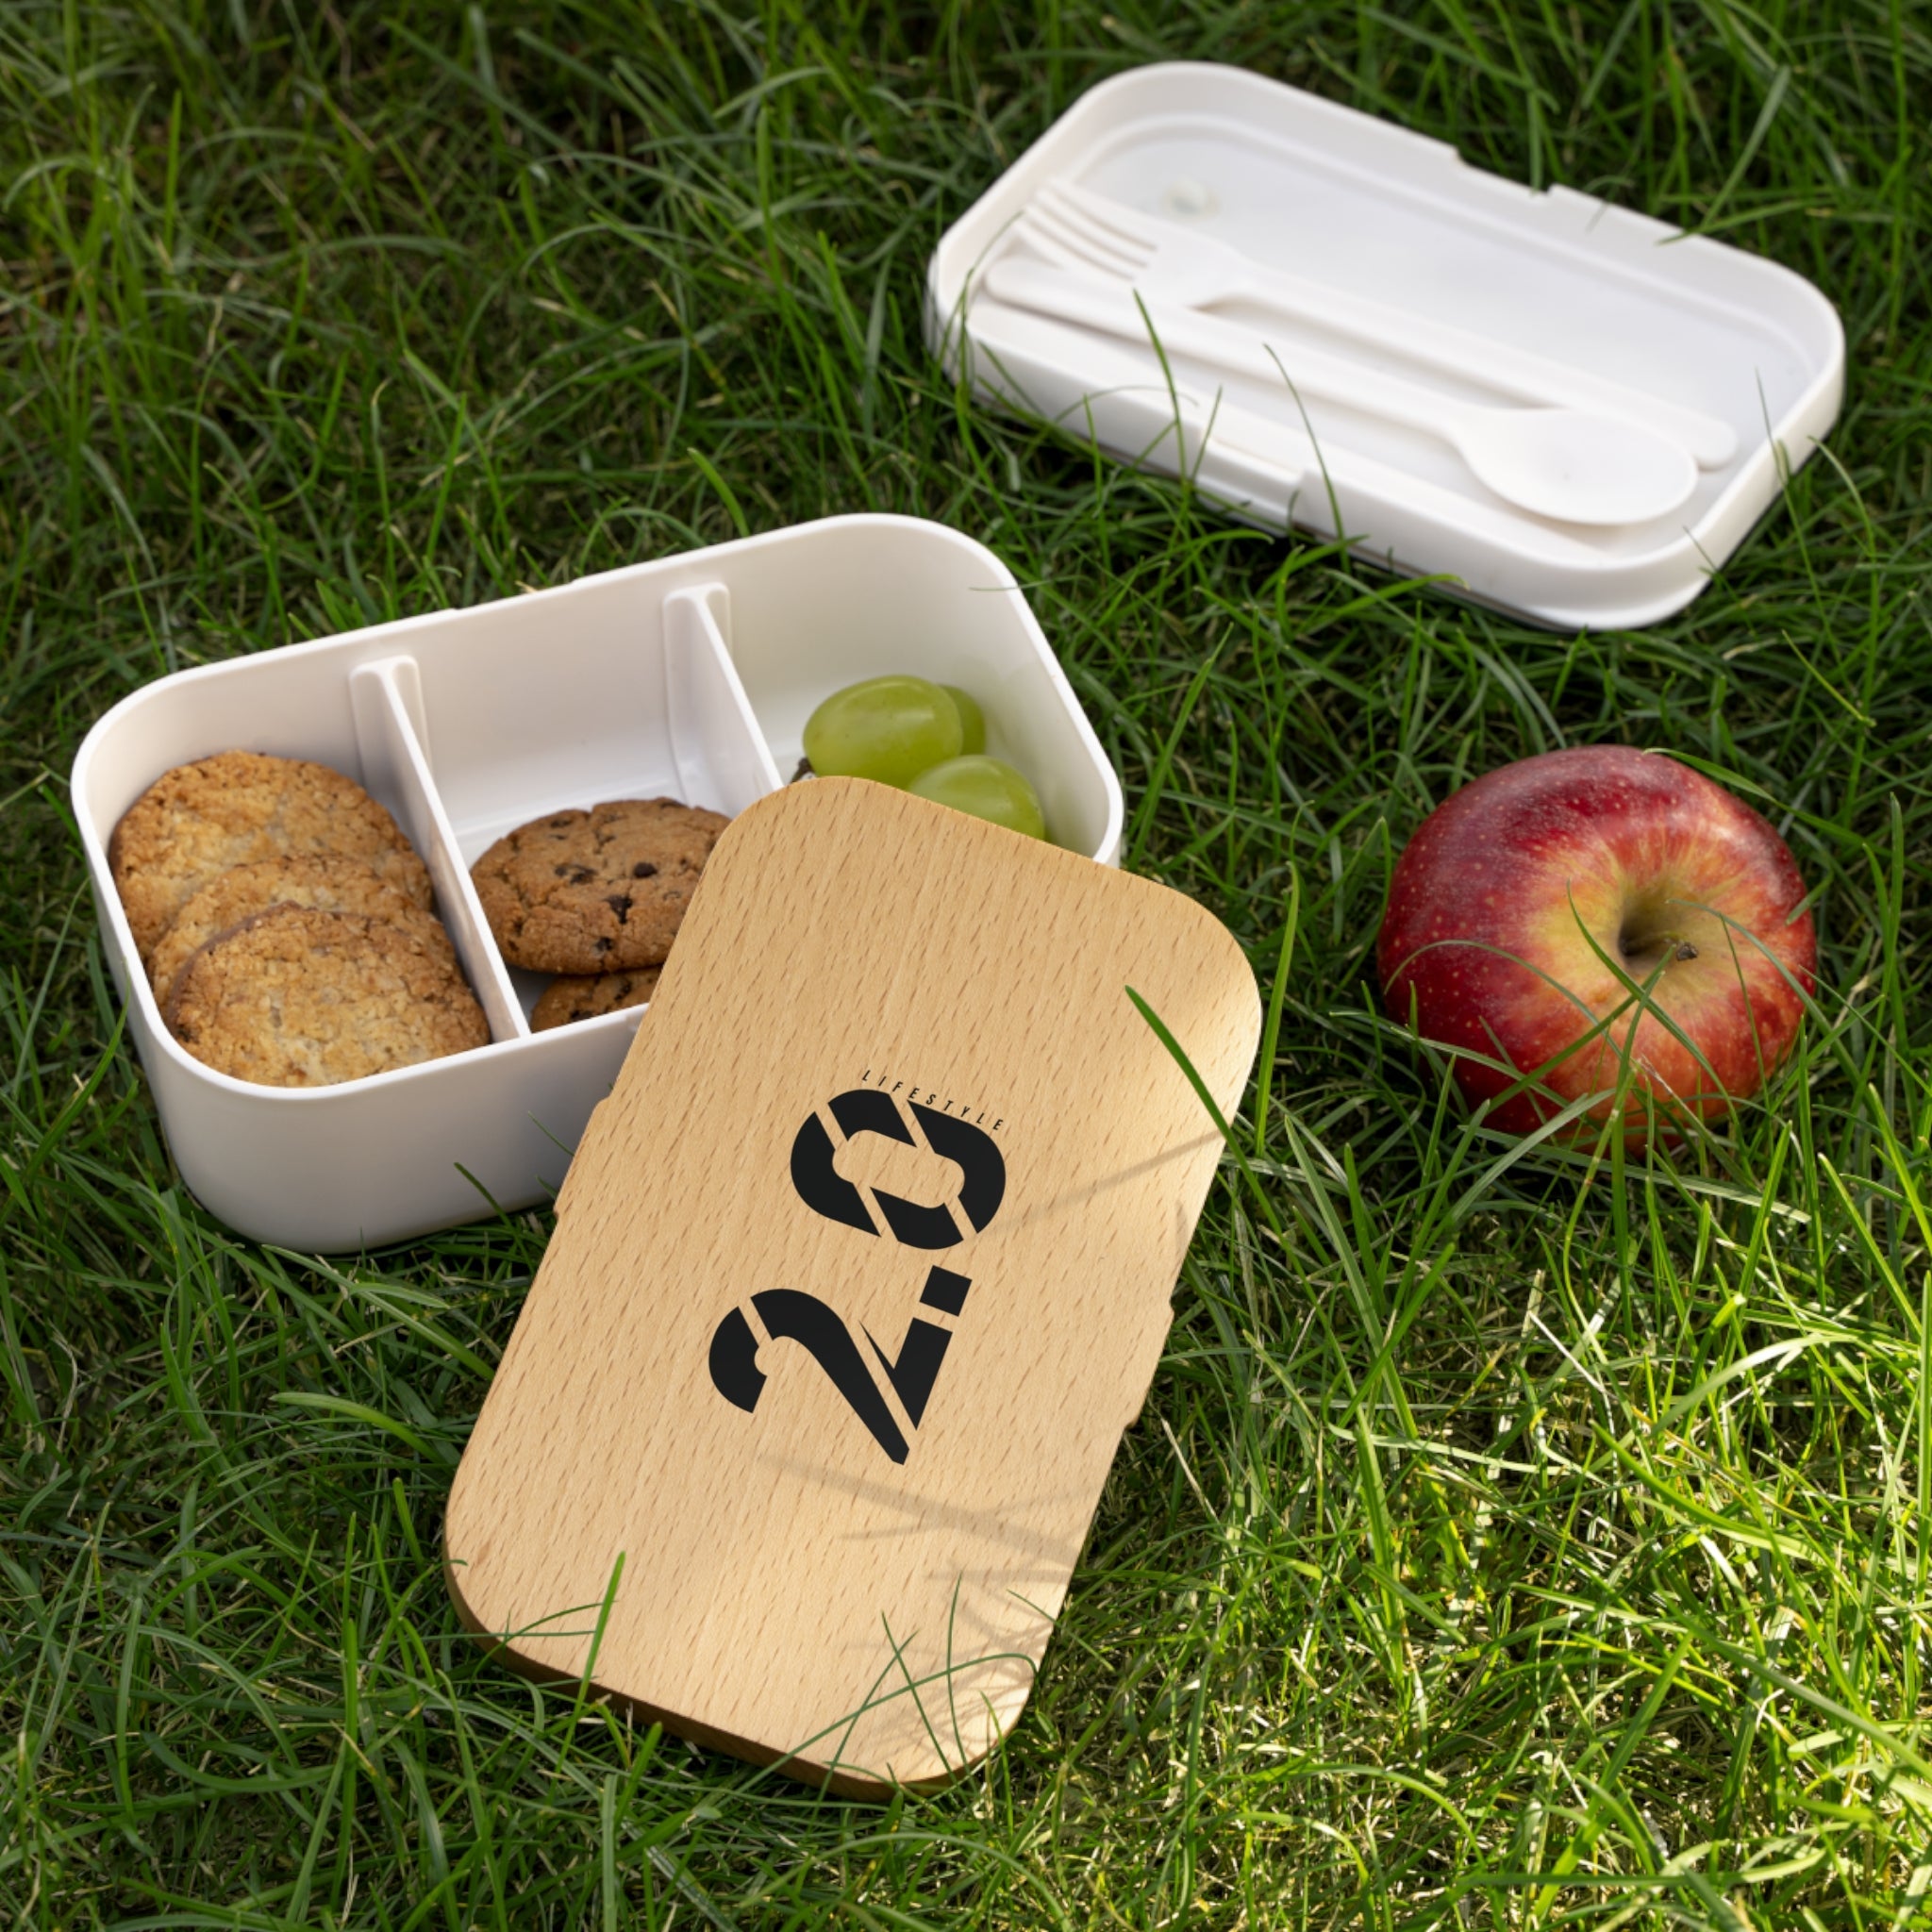 Bento Lunch Box - 2.0 Lifestyle